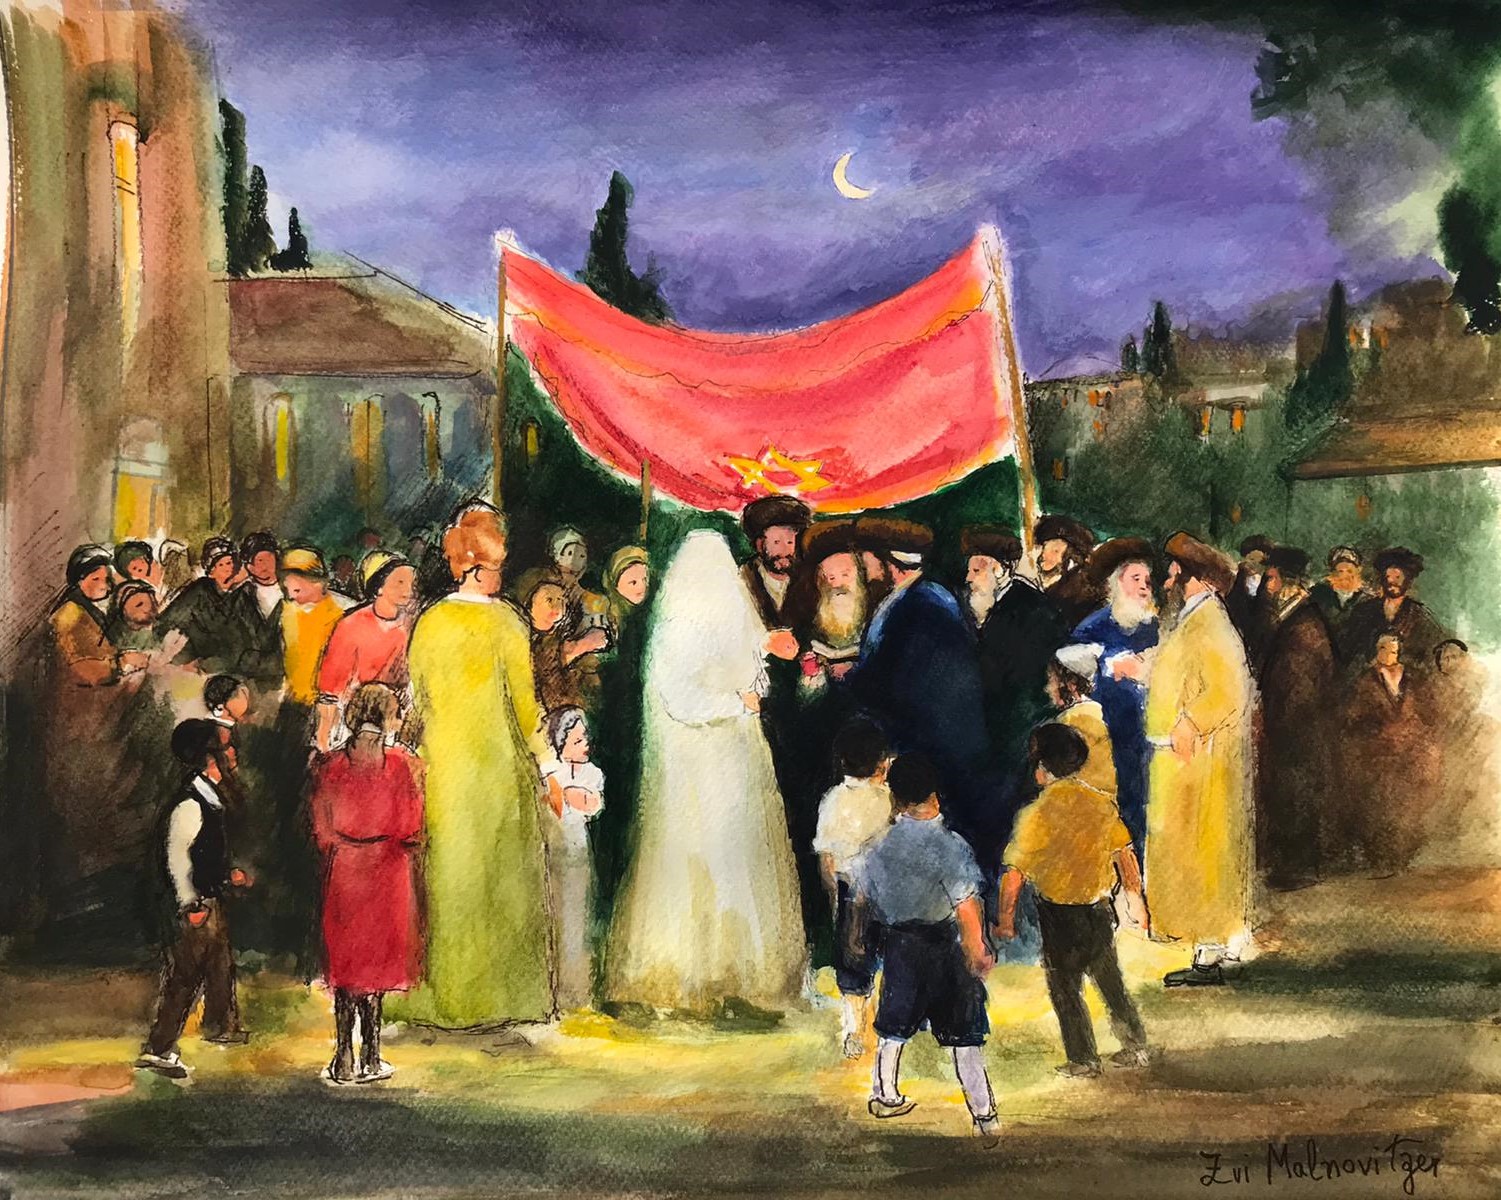 Zvi Malnovitzer - Jewish wedding - Kings Gallery - Fine art - Jerusalem - art - Israeli artist - jewish art.